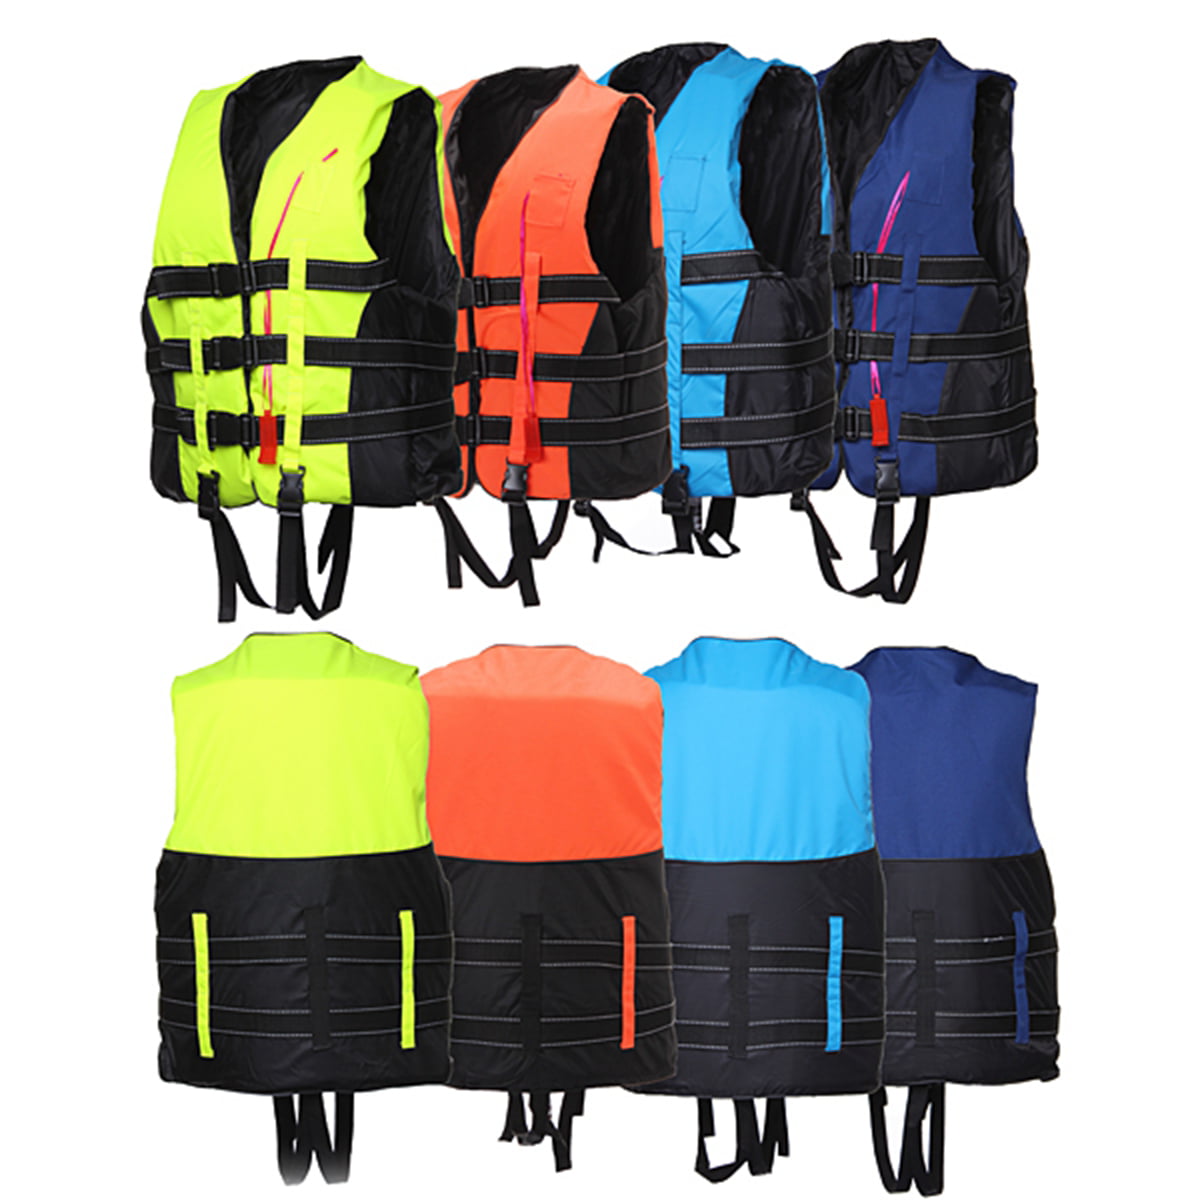 Adult Universal Adjustable Fishing Life Jacket Boating Kayaking Watersports Life Vest With